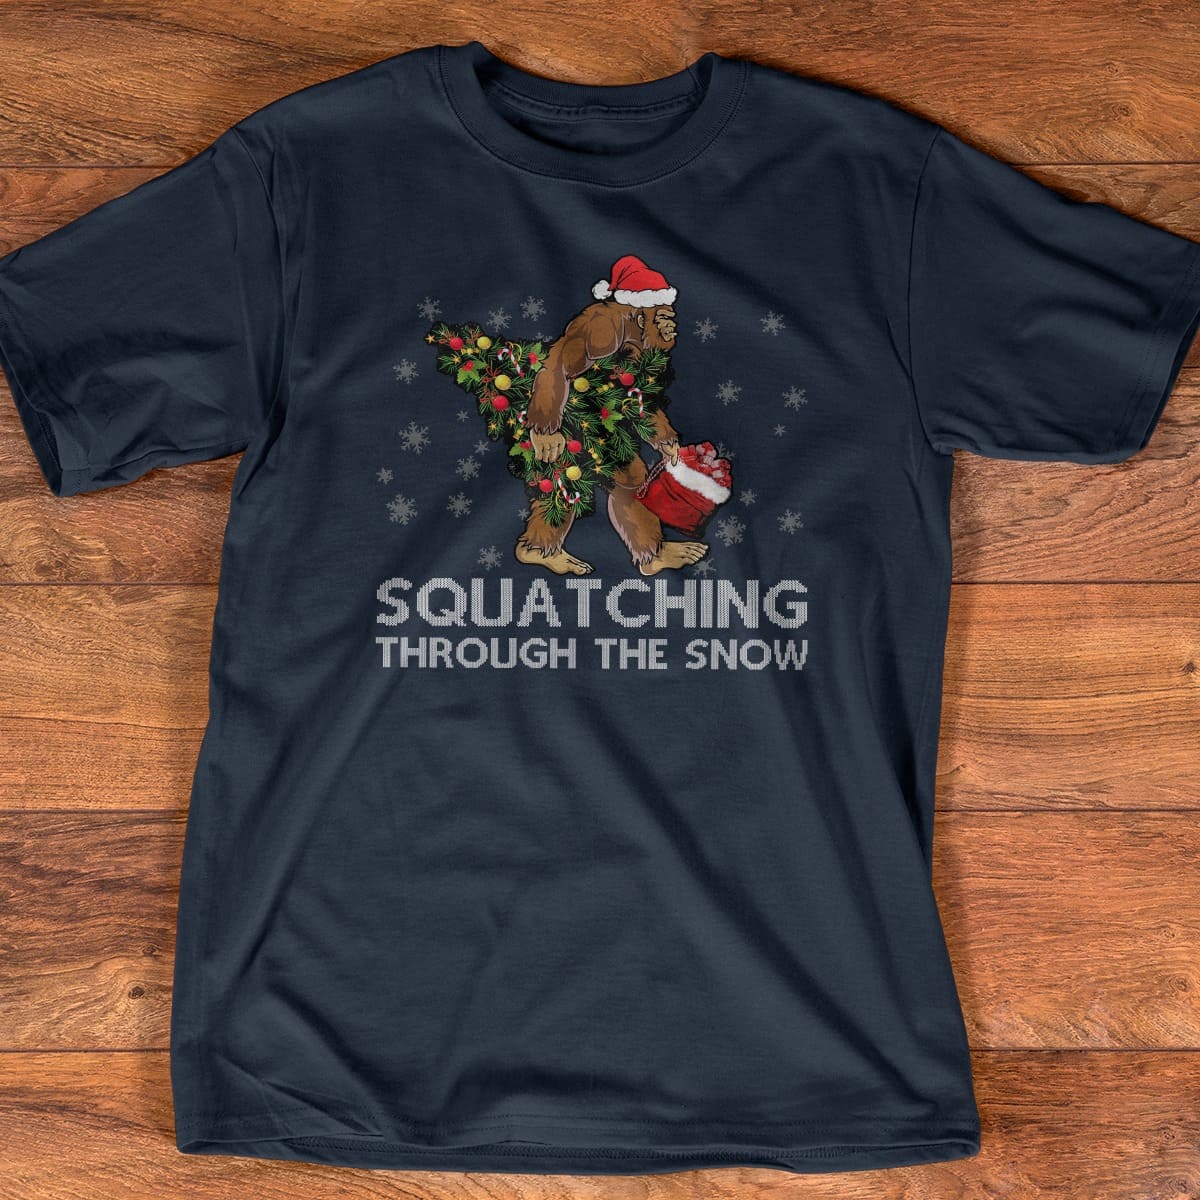 Squatching through the snow - Bigfoot and Christmas tree, Bigfoot wearing Santa hat